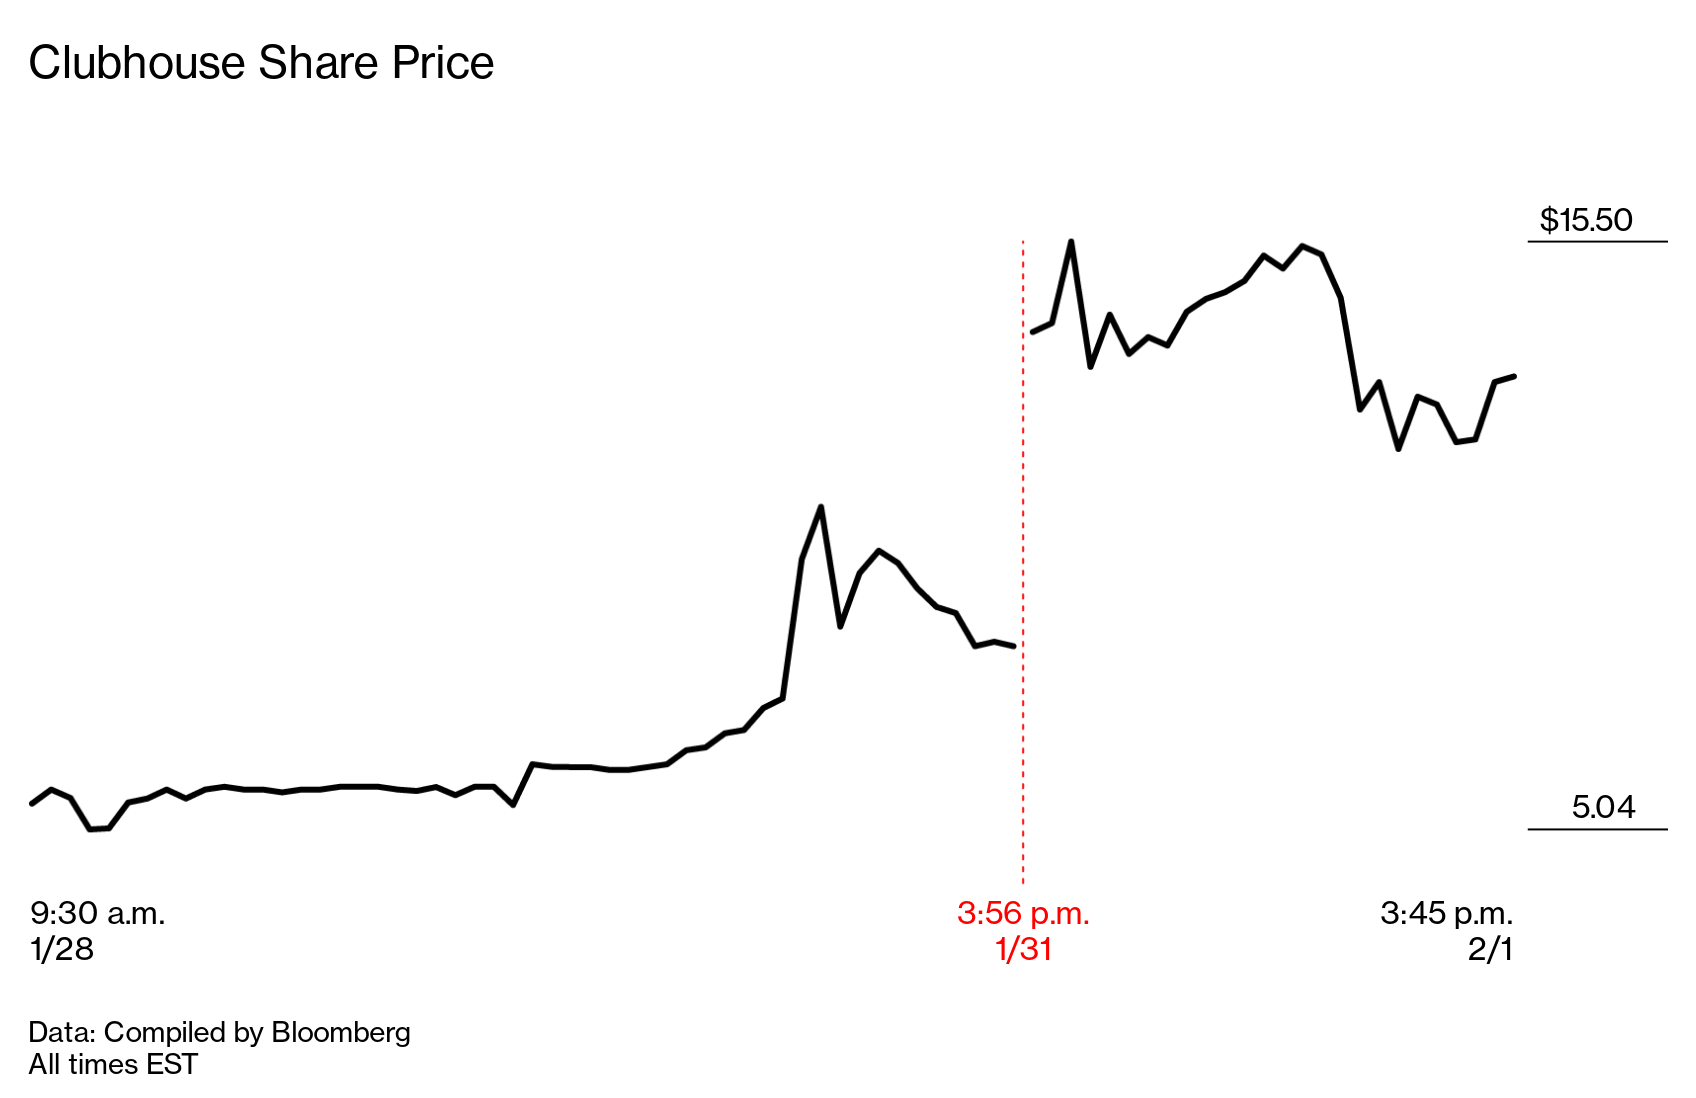 signal advance share price